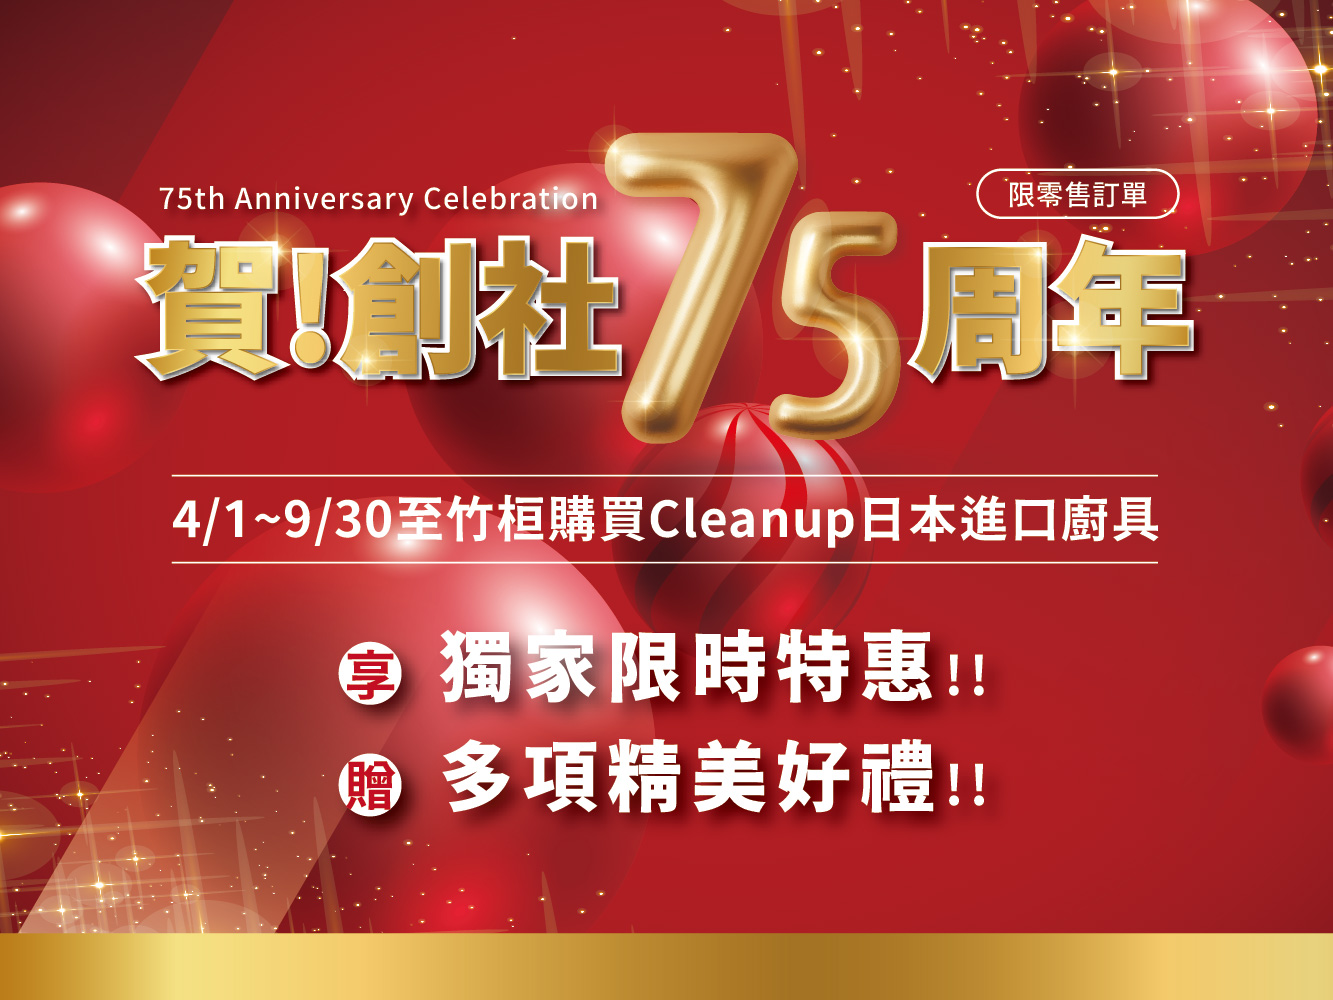 Cleanup創社75週年慶，同時適逢母親節，竹桓推出盛大優惠活動